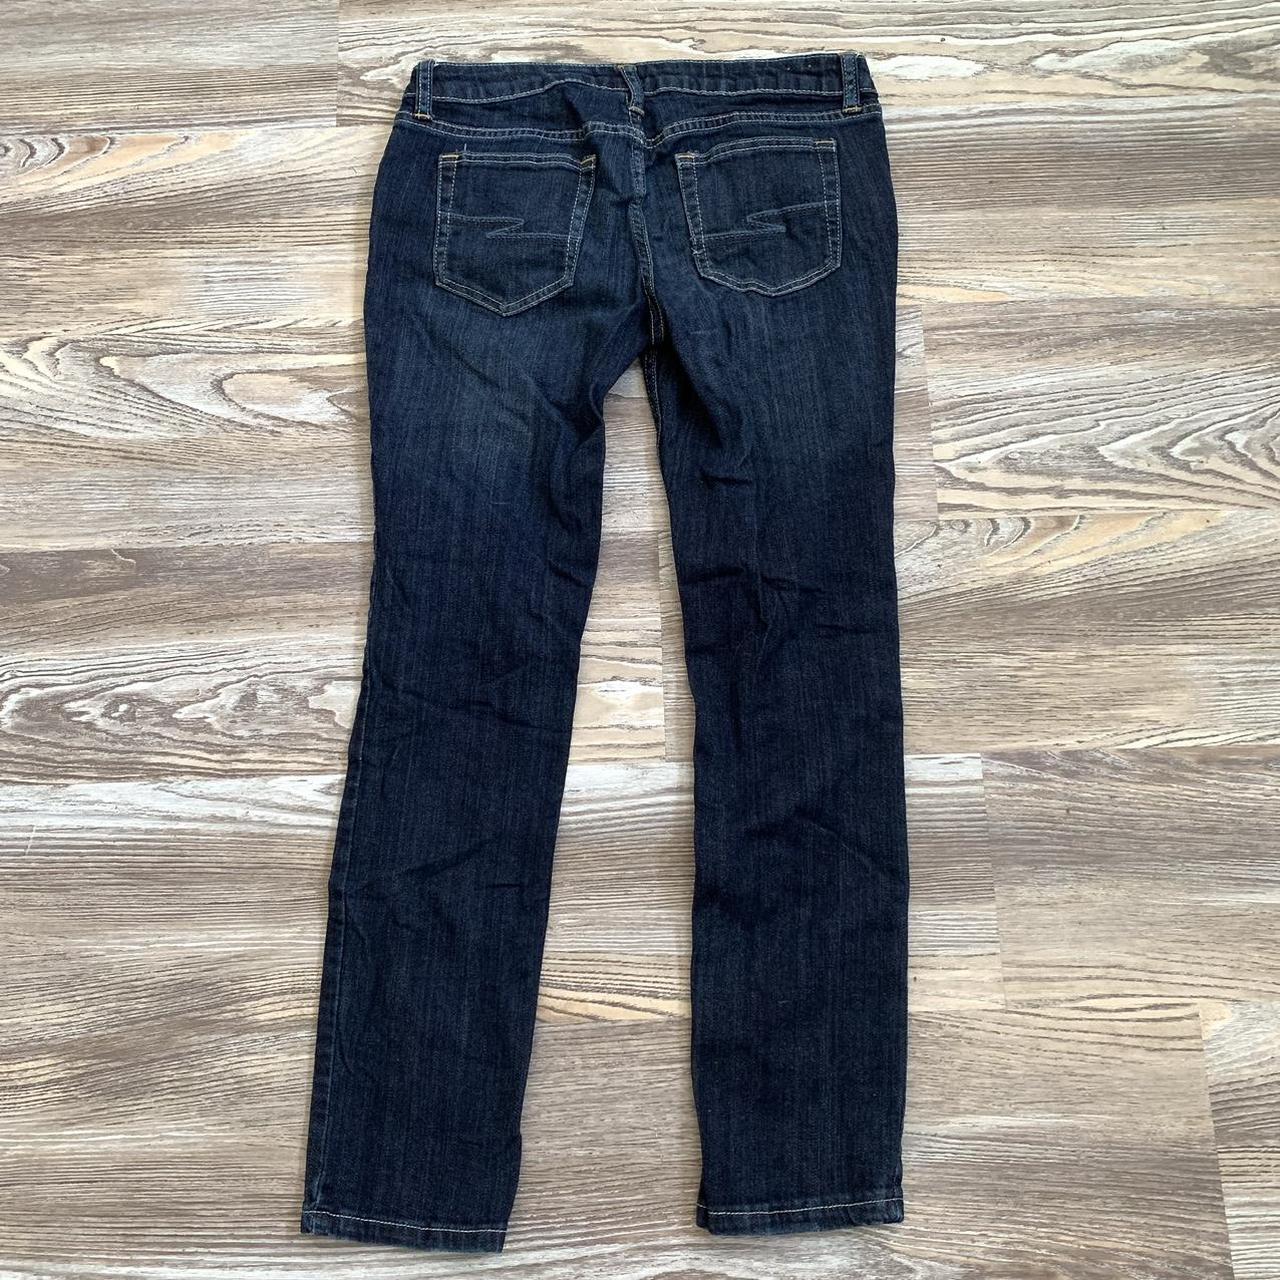 Arizona blue denim, skinny size short.... - jeans! 7 Dark Depop